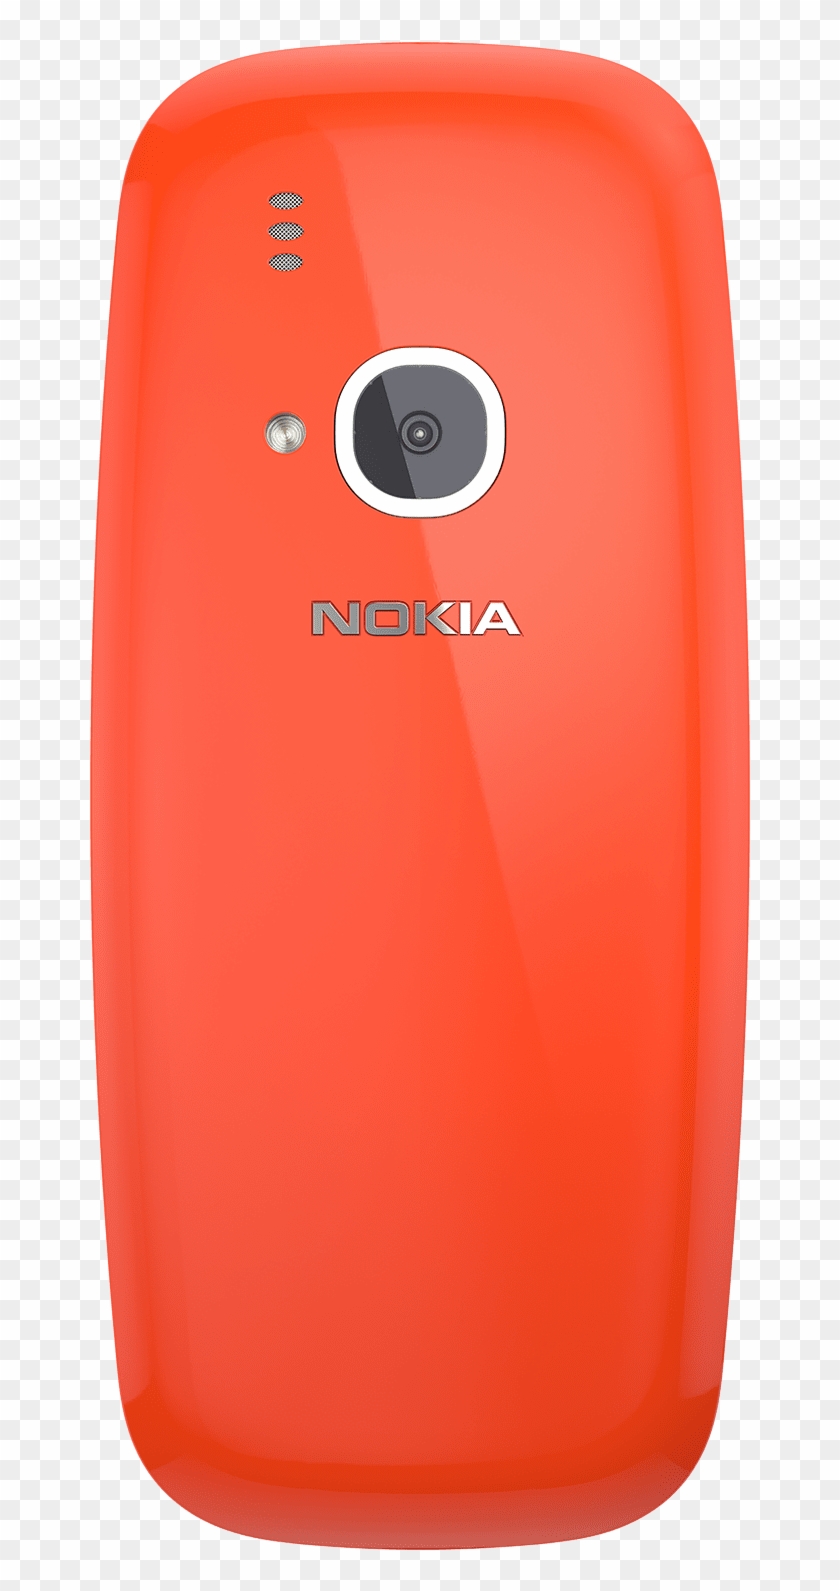 Nokia 3310 Nokia 3310 Nokia 3310 - Smartphone Clipart #4610598